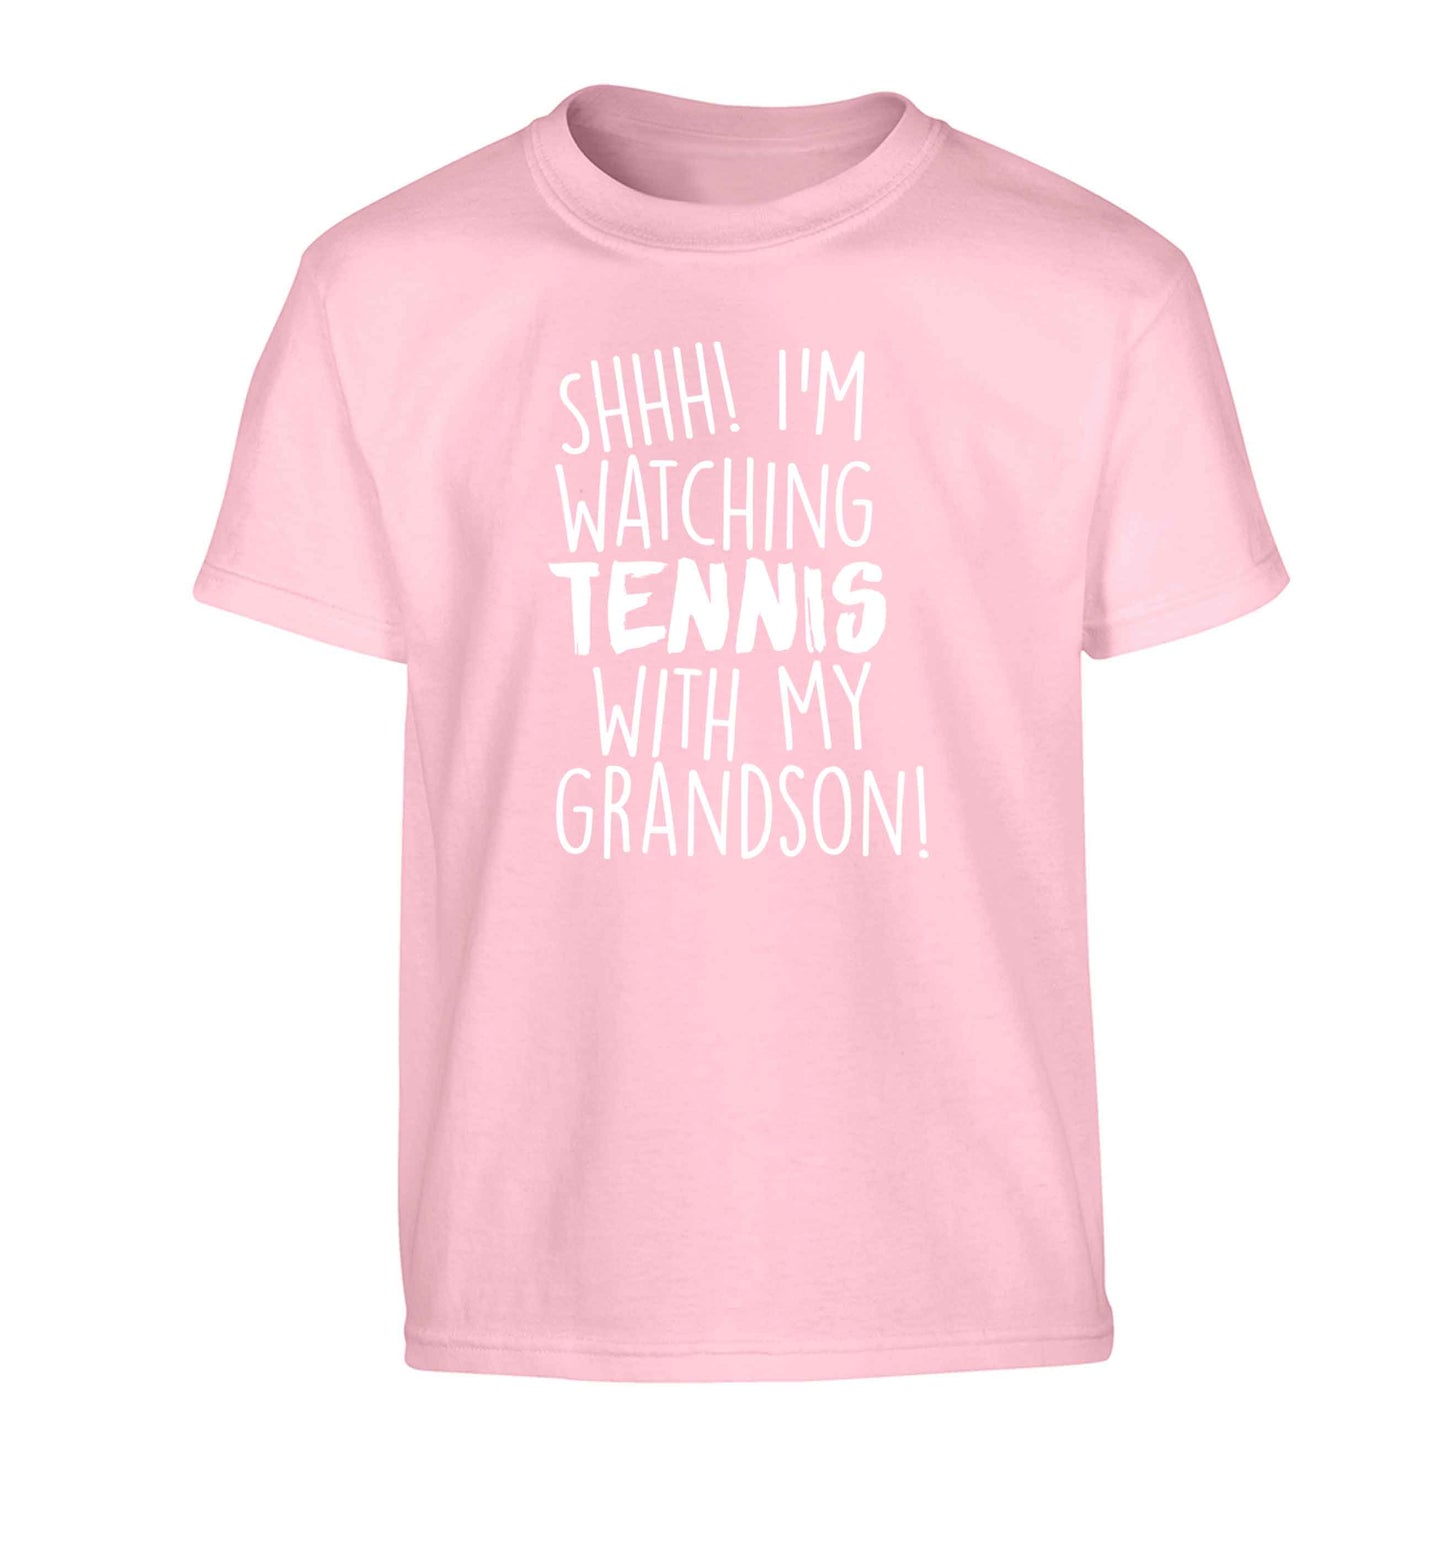 Shh! I'm watching tennis with my grandson! Children's light pink Tshirt 12-13 Years